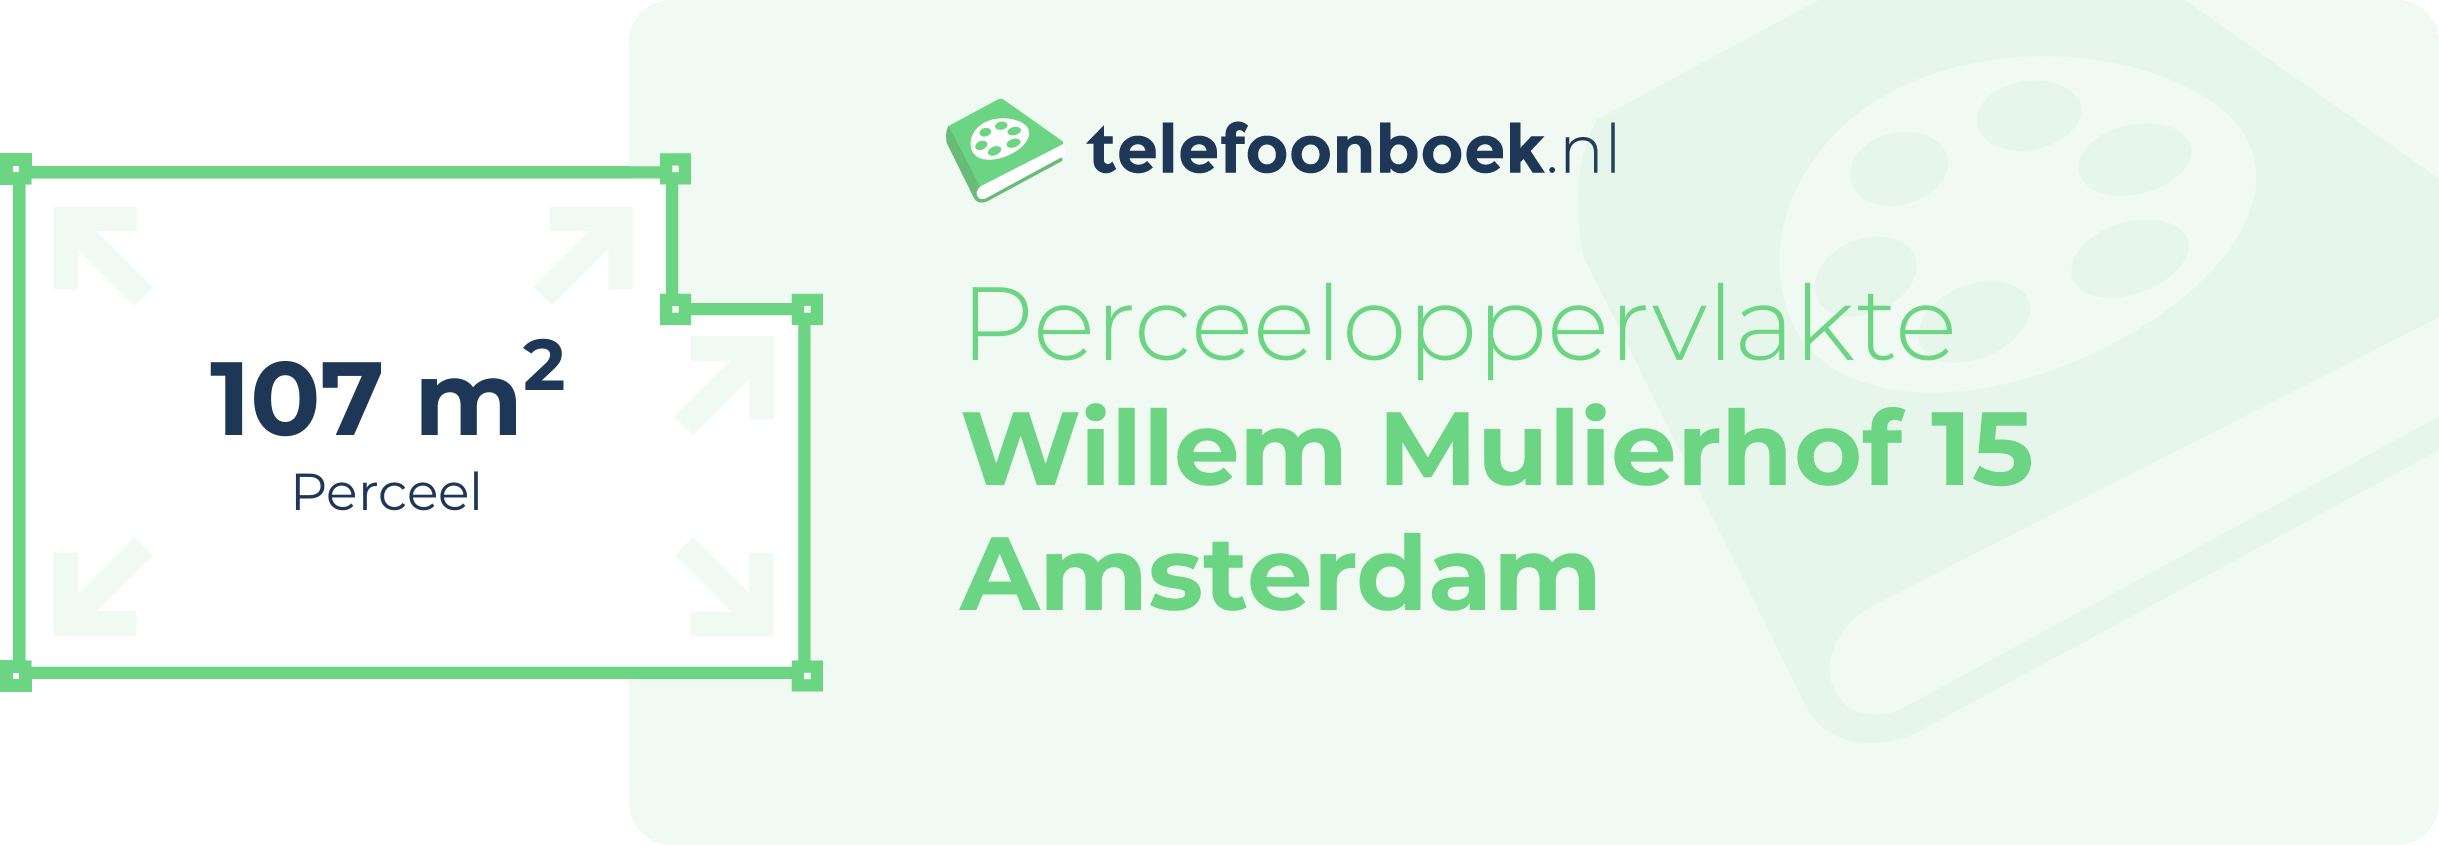 Perceeloppervlakte Willem Mulierhof 15 Amsterdam